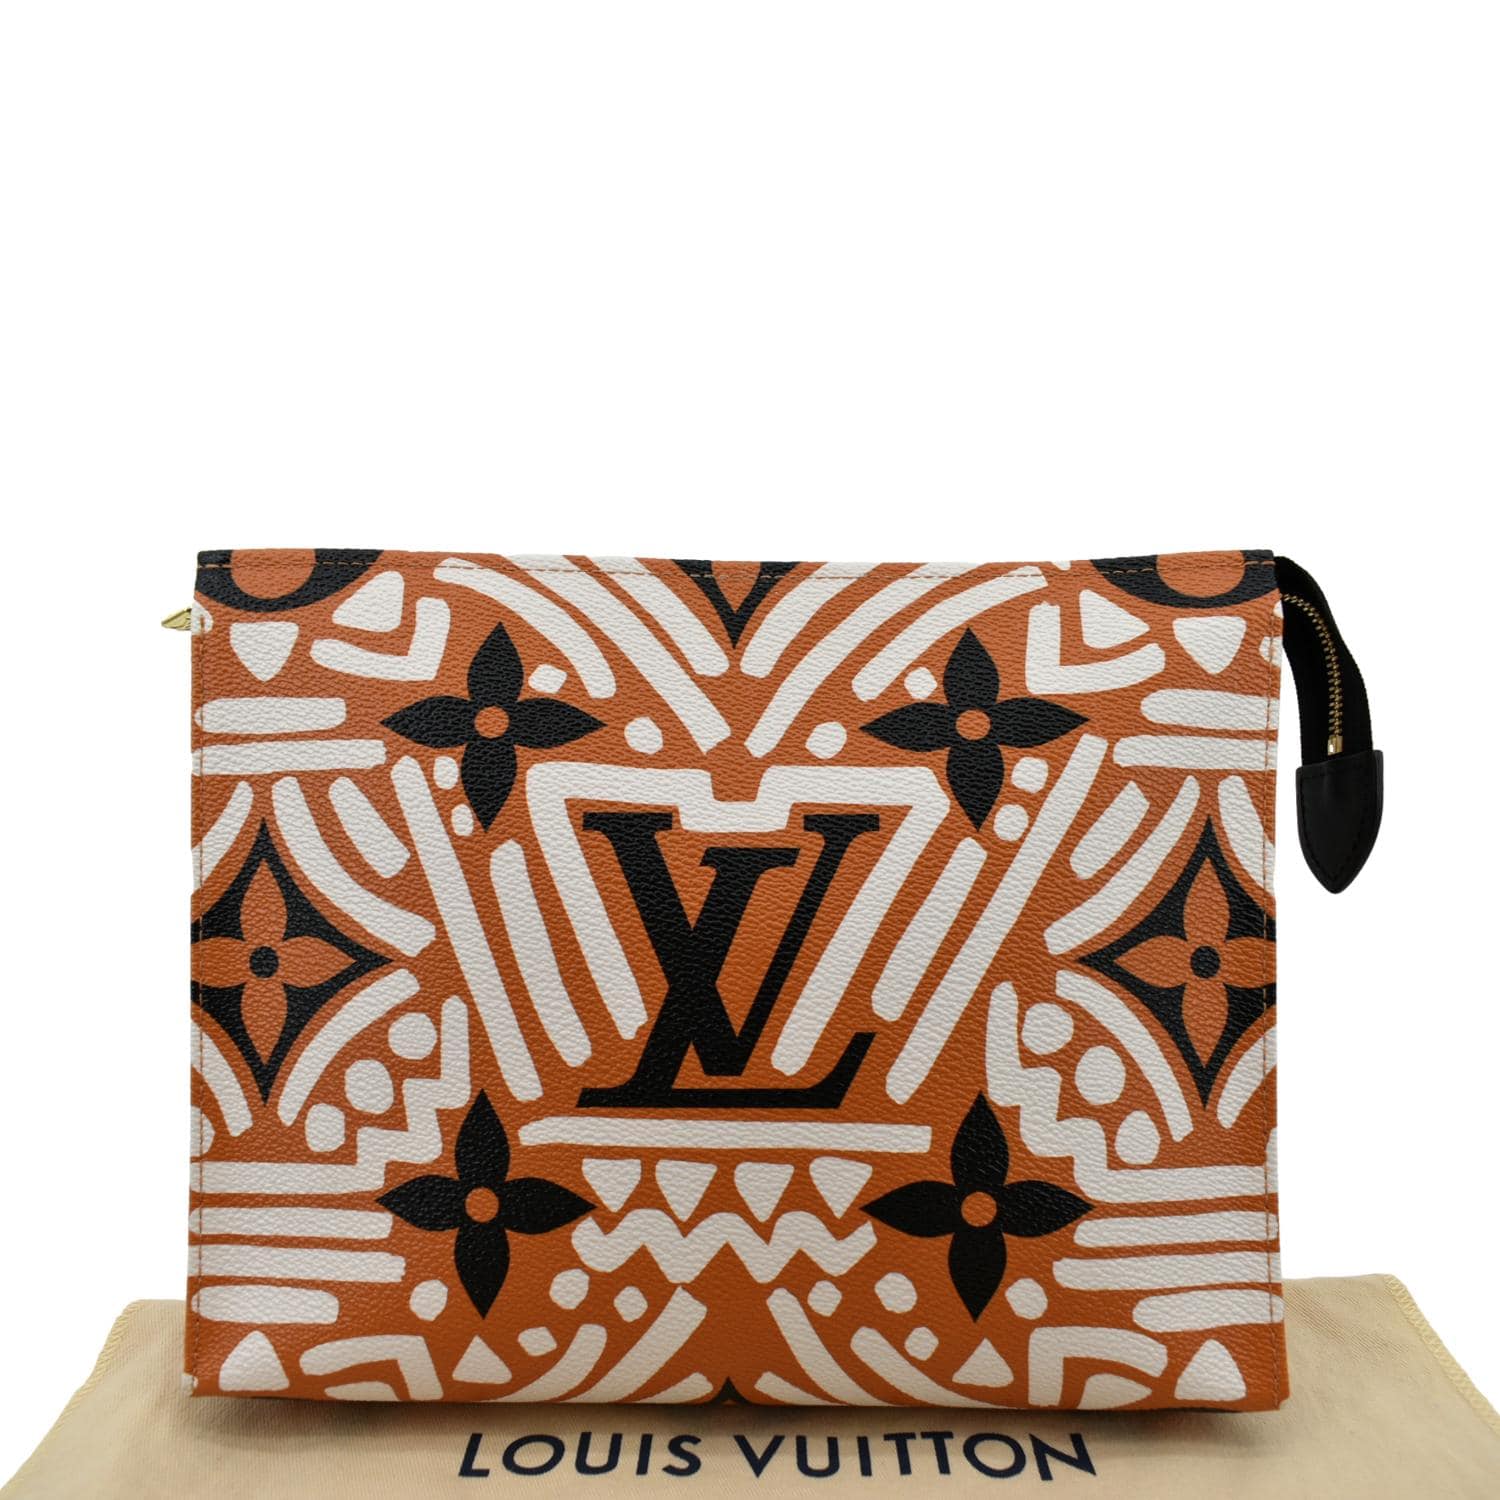 Authentic Louis Vuitton toiletry 26 Damier Pouch Limited edition